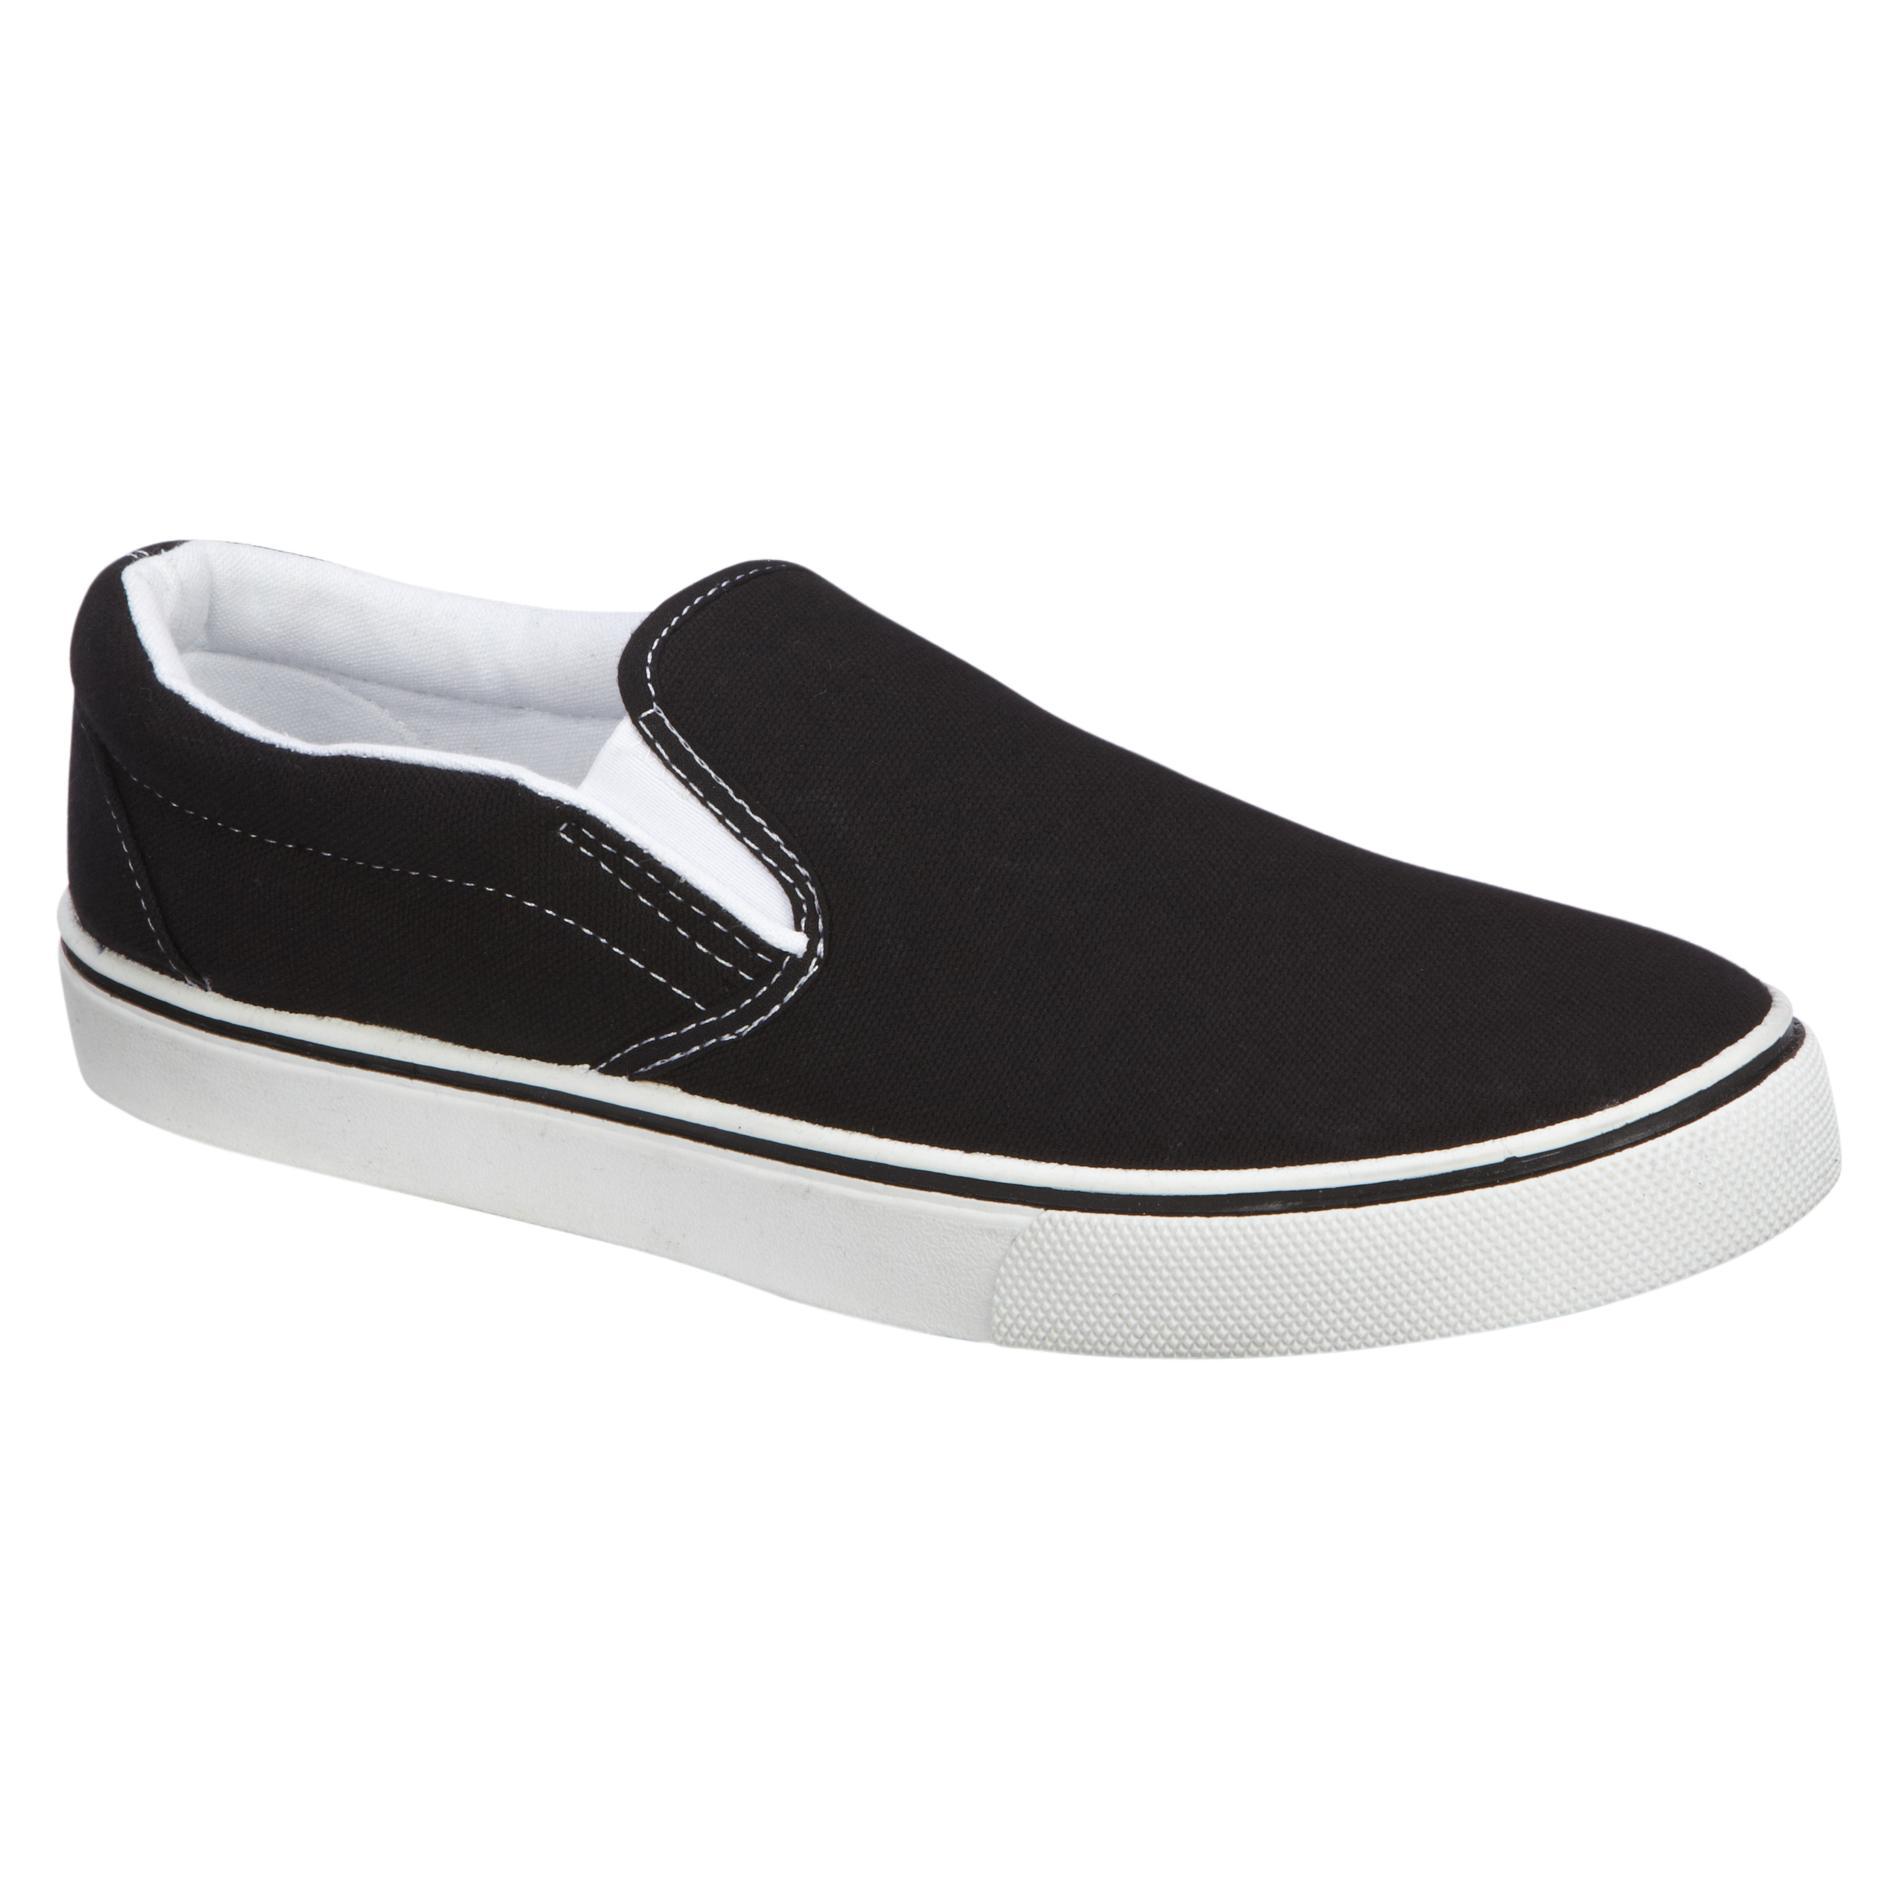 Men's Kaj Black White Casual Shoe: Comfortable Footwear from Kmart